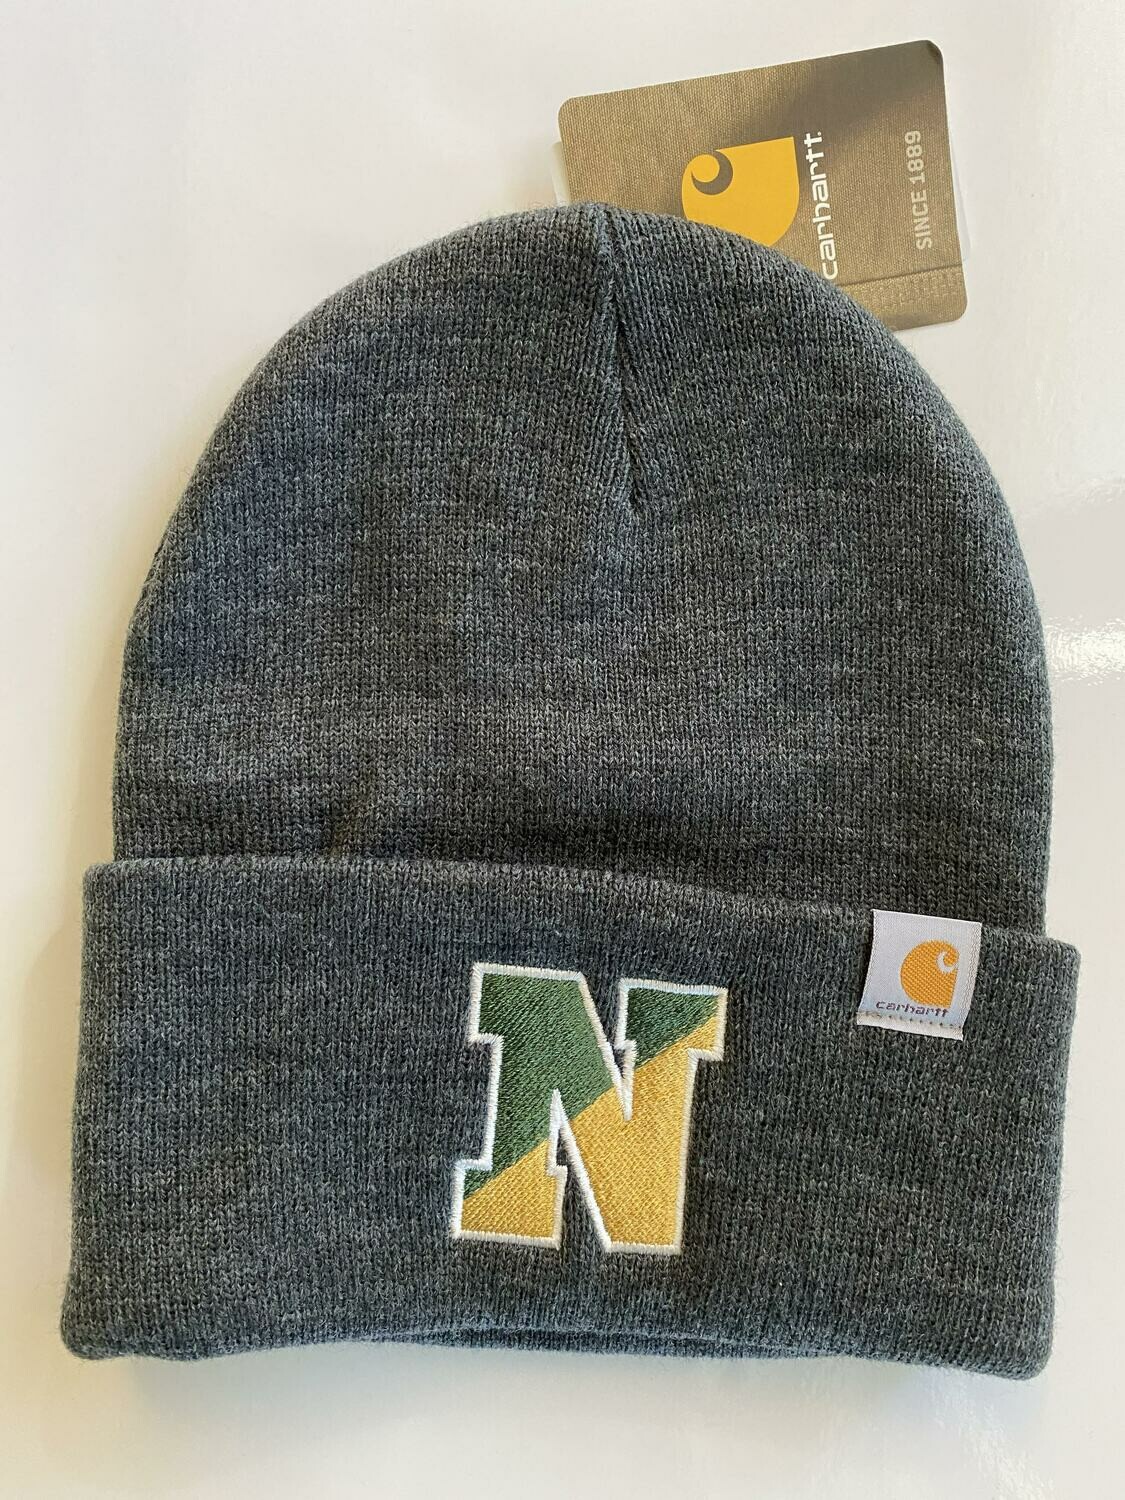 Carhartt Nashoba Winter Hat